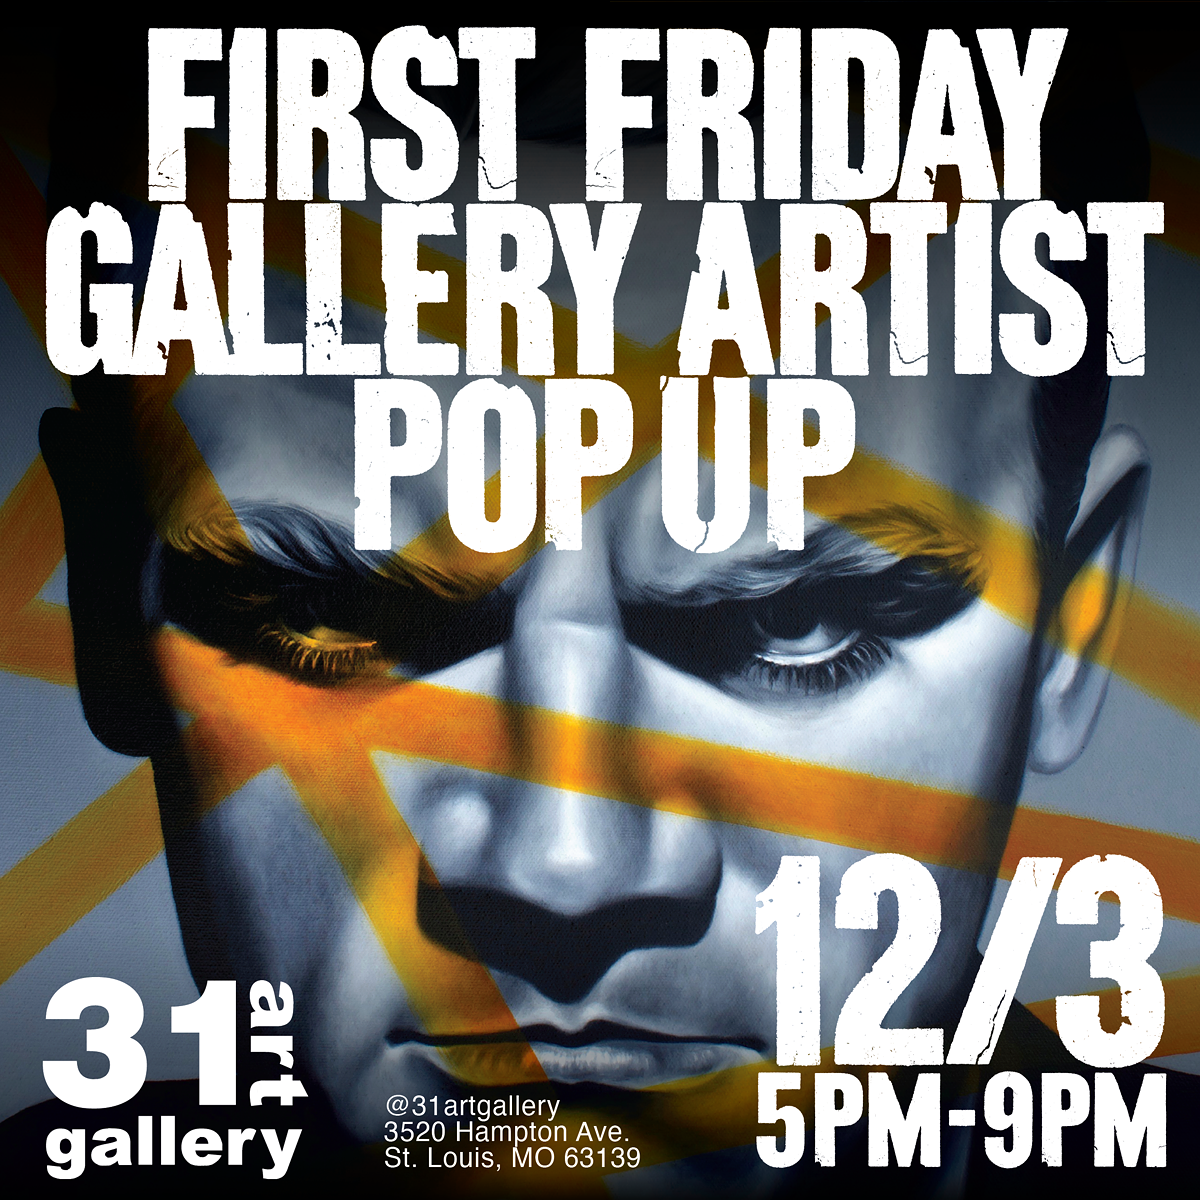 First Friday Gallery Artist Pop Up